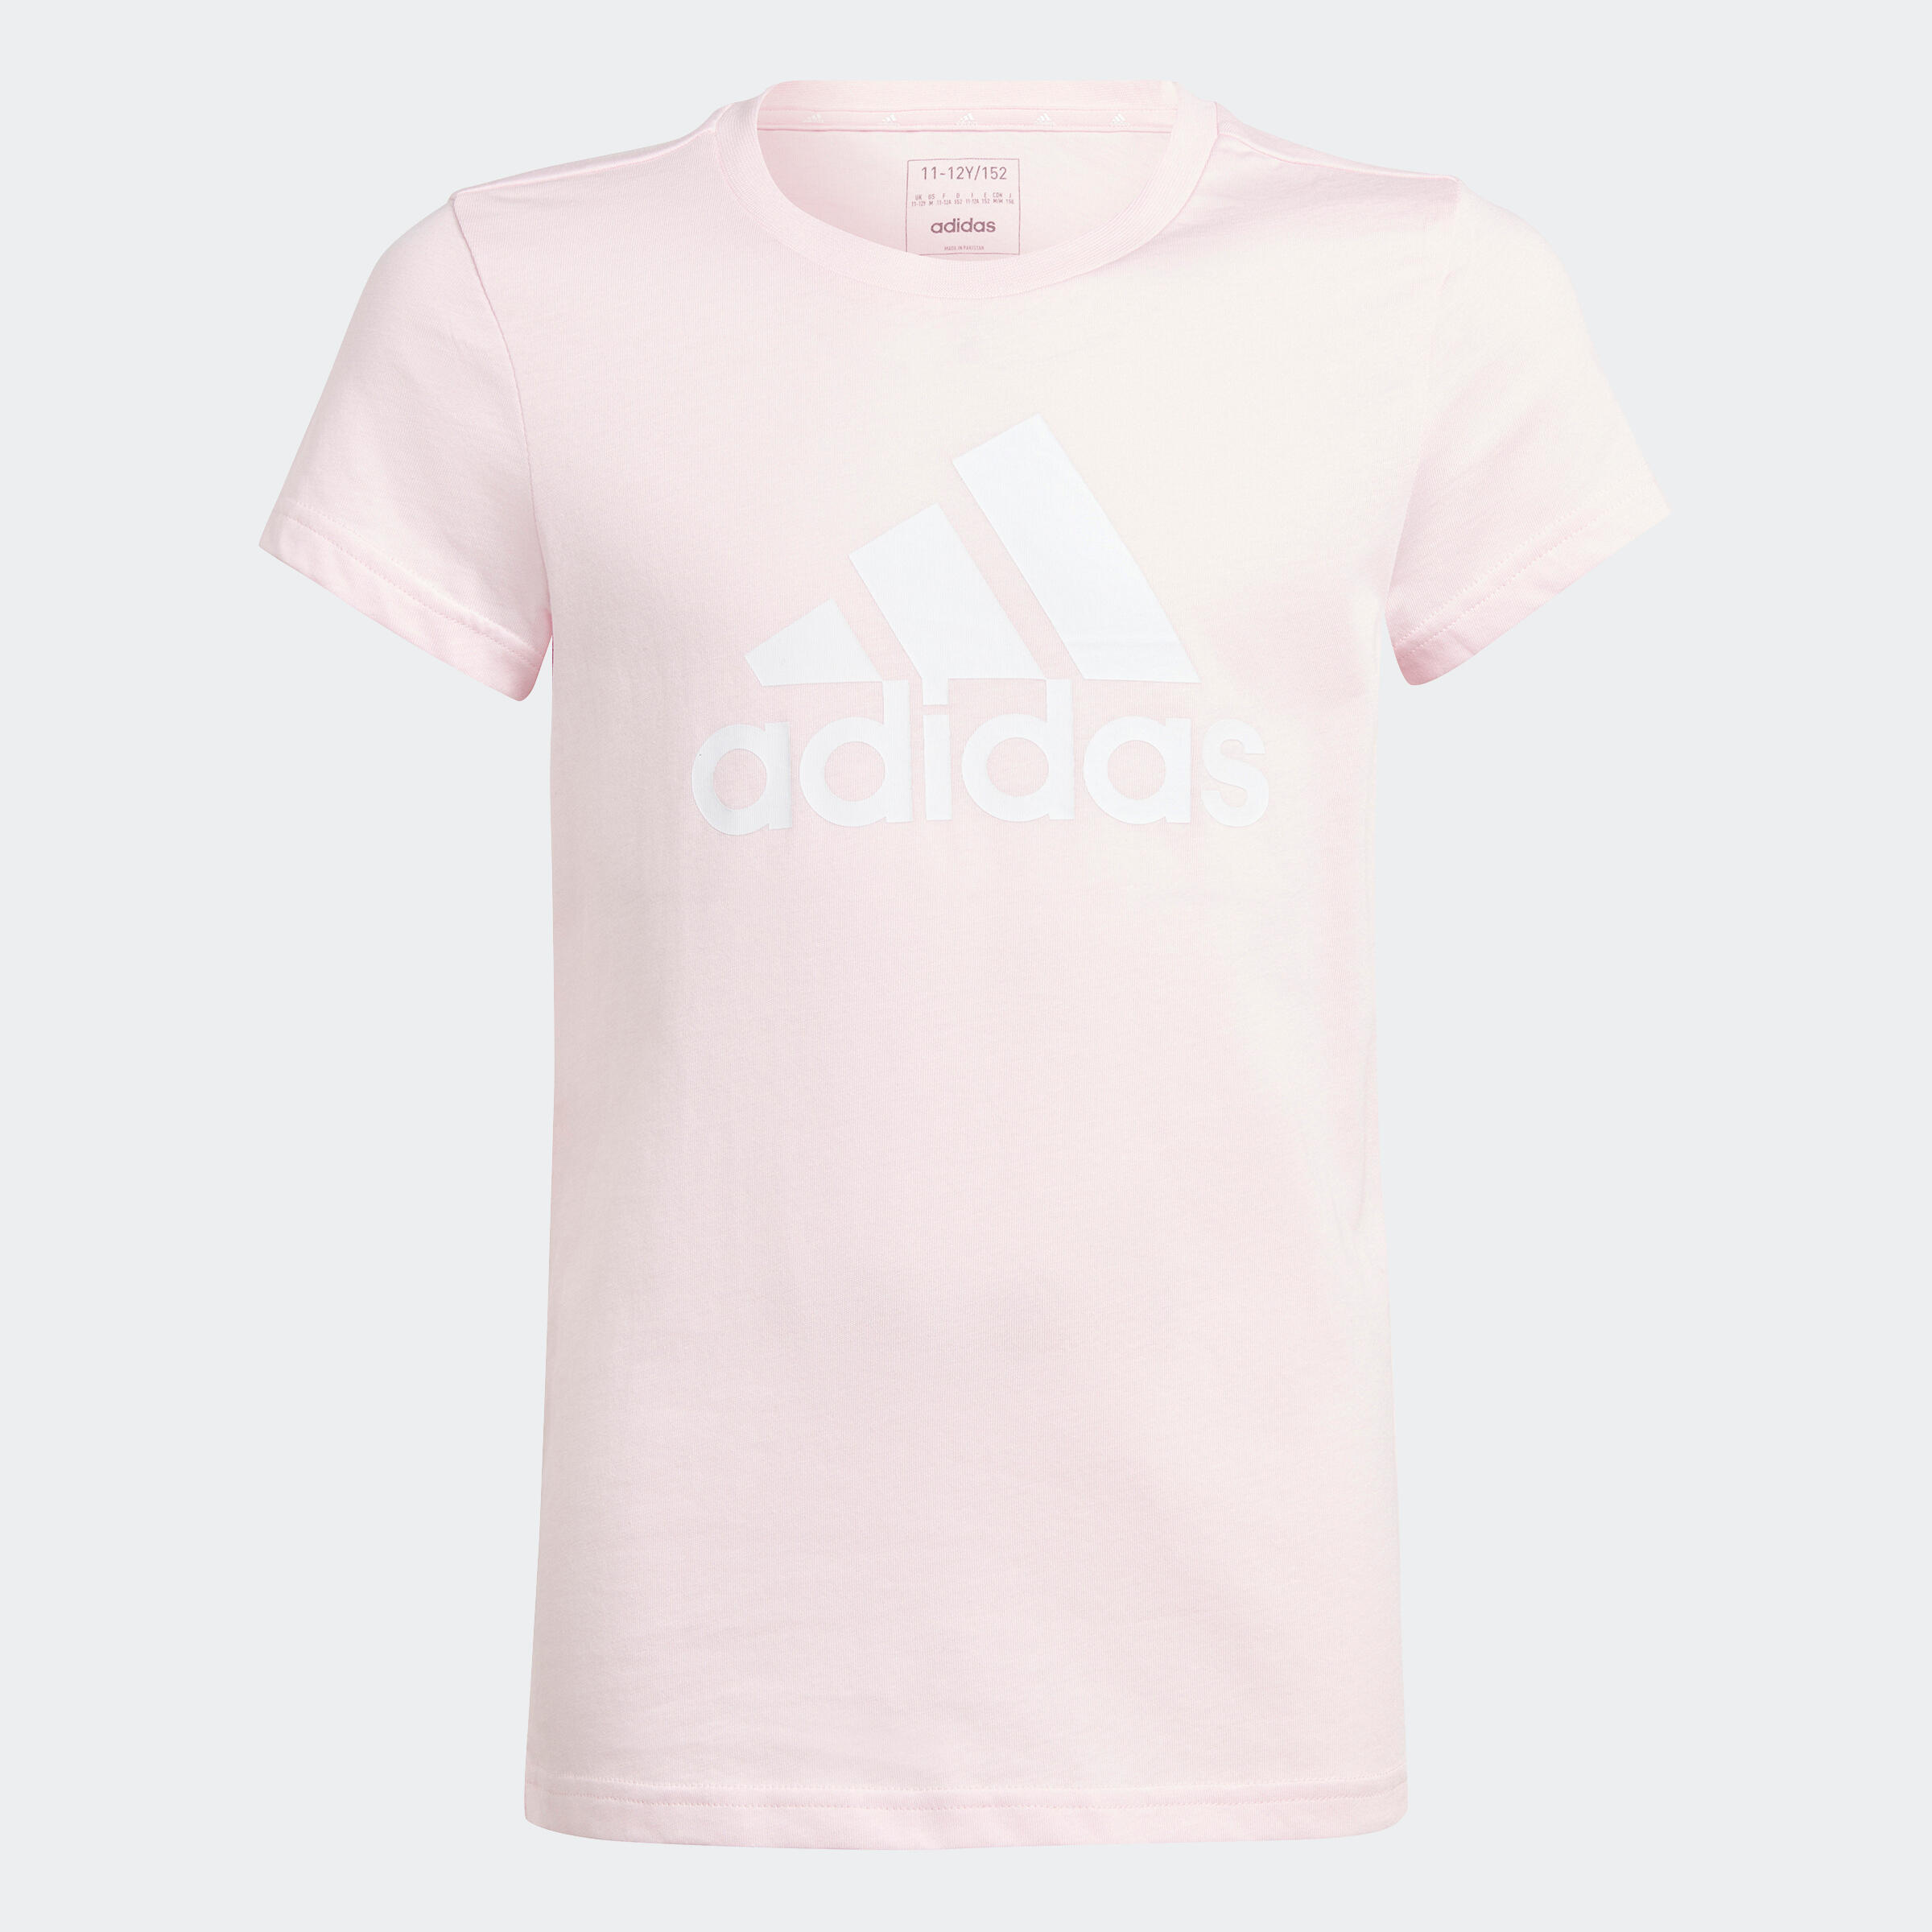 Decathlon | T-shirt ADIDAS bambina ginnastica regular fit cotone rosa-bianco |  Adidas